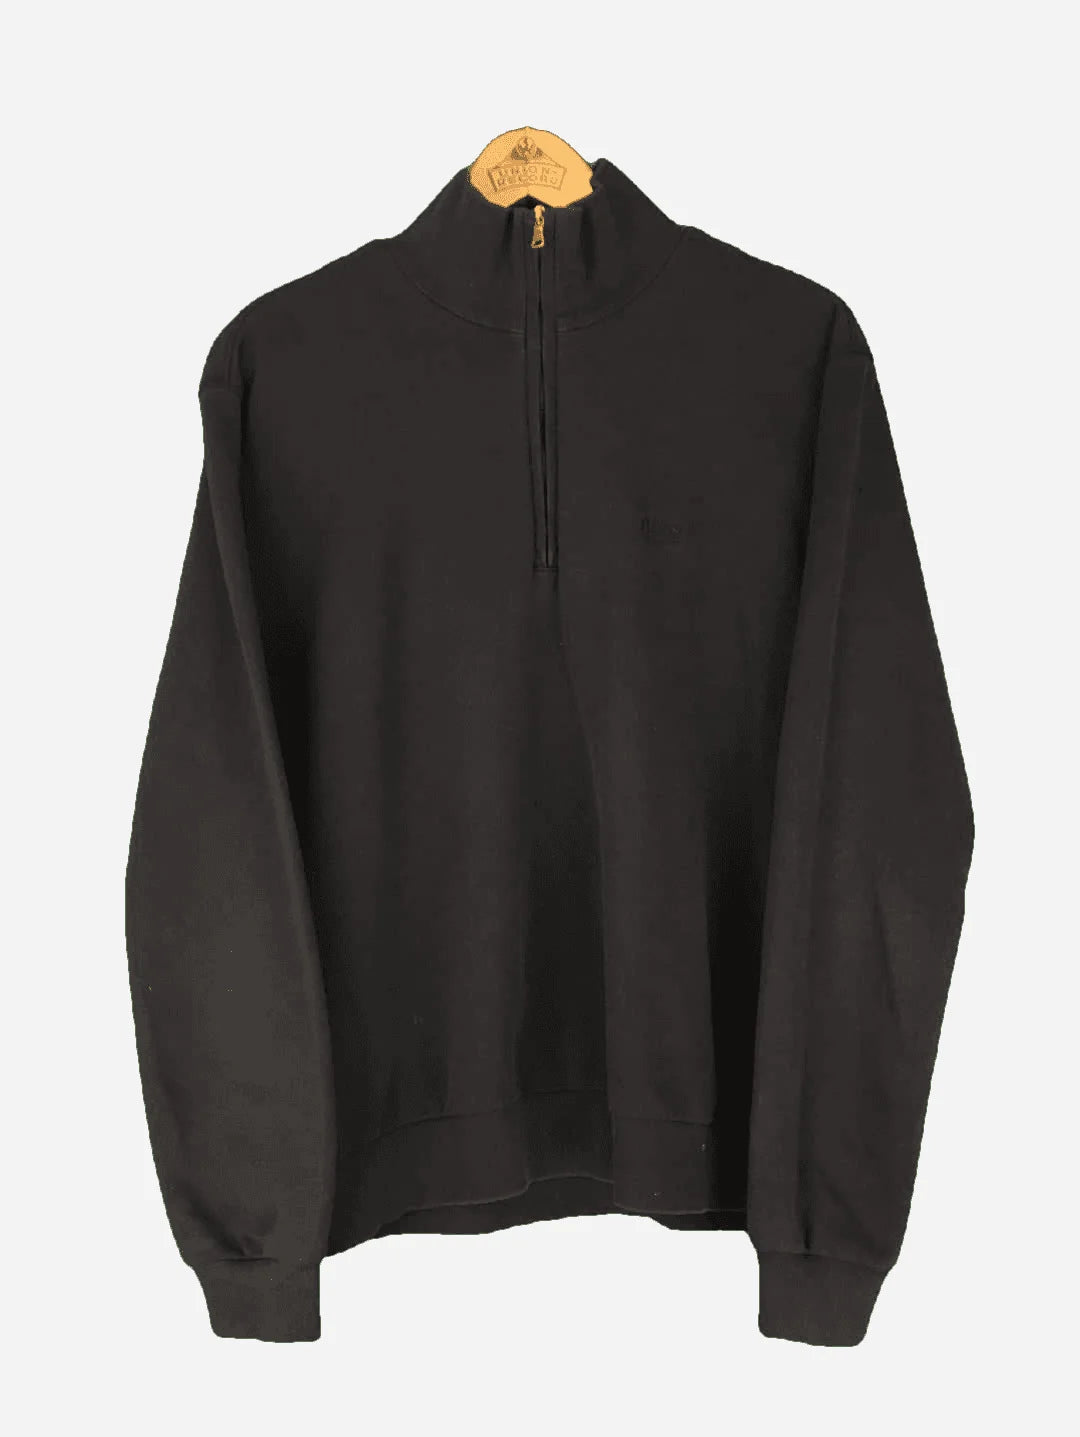 Hugo Boss Halfzip Sweater (L)